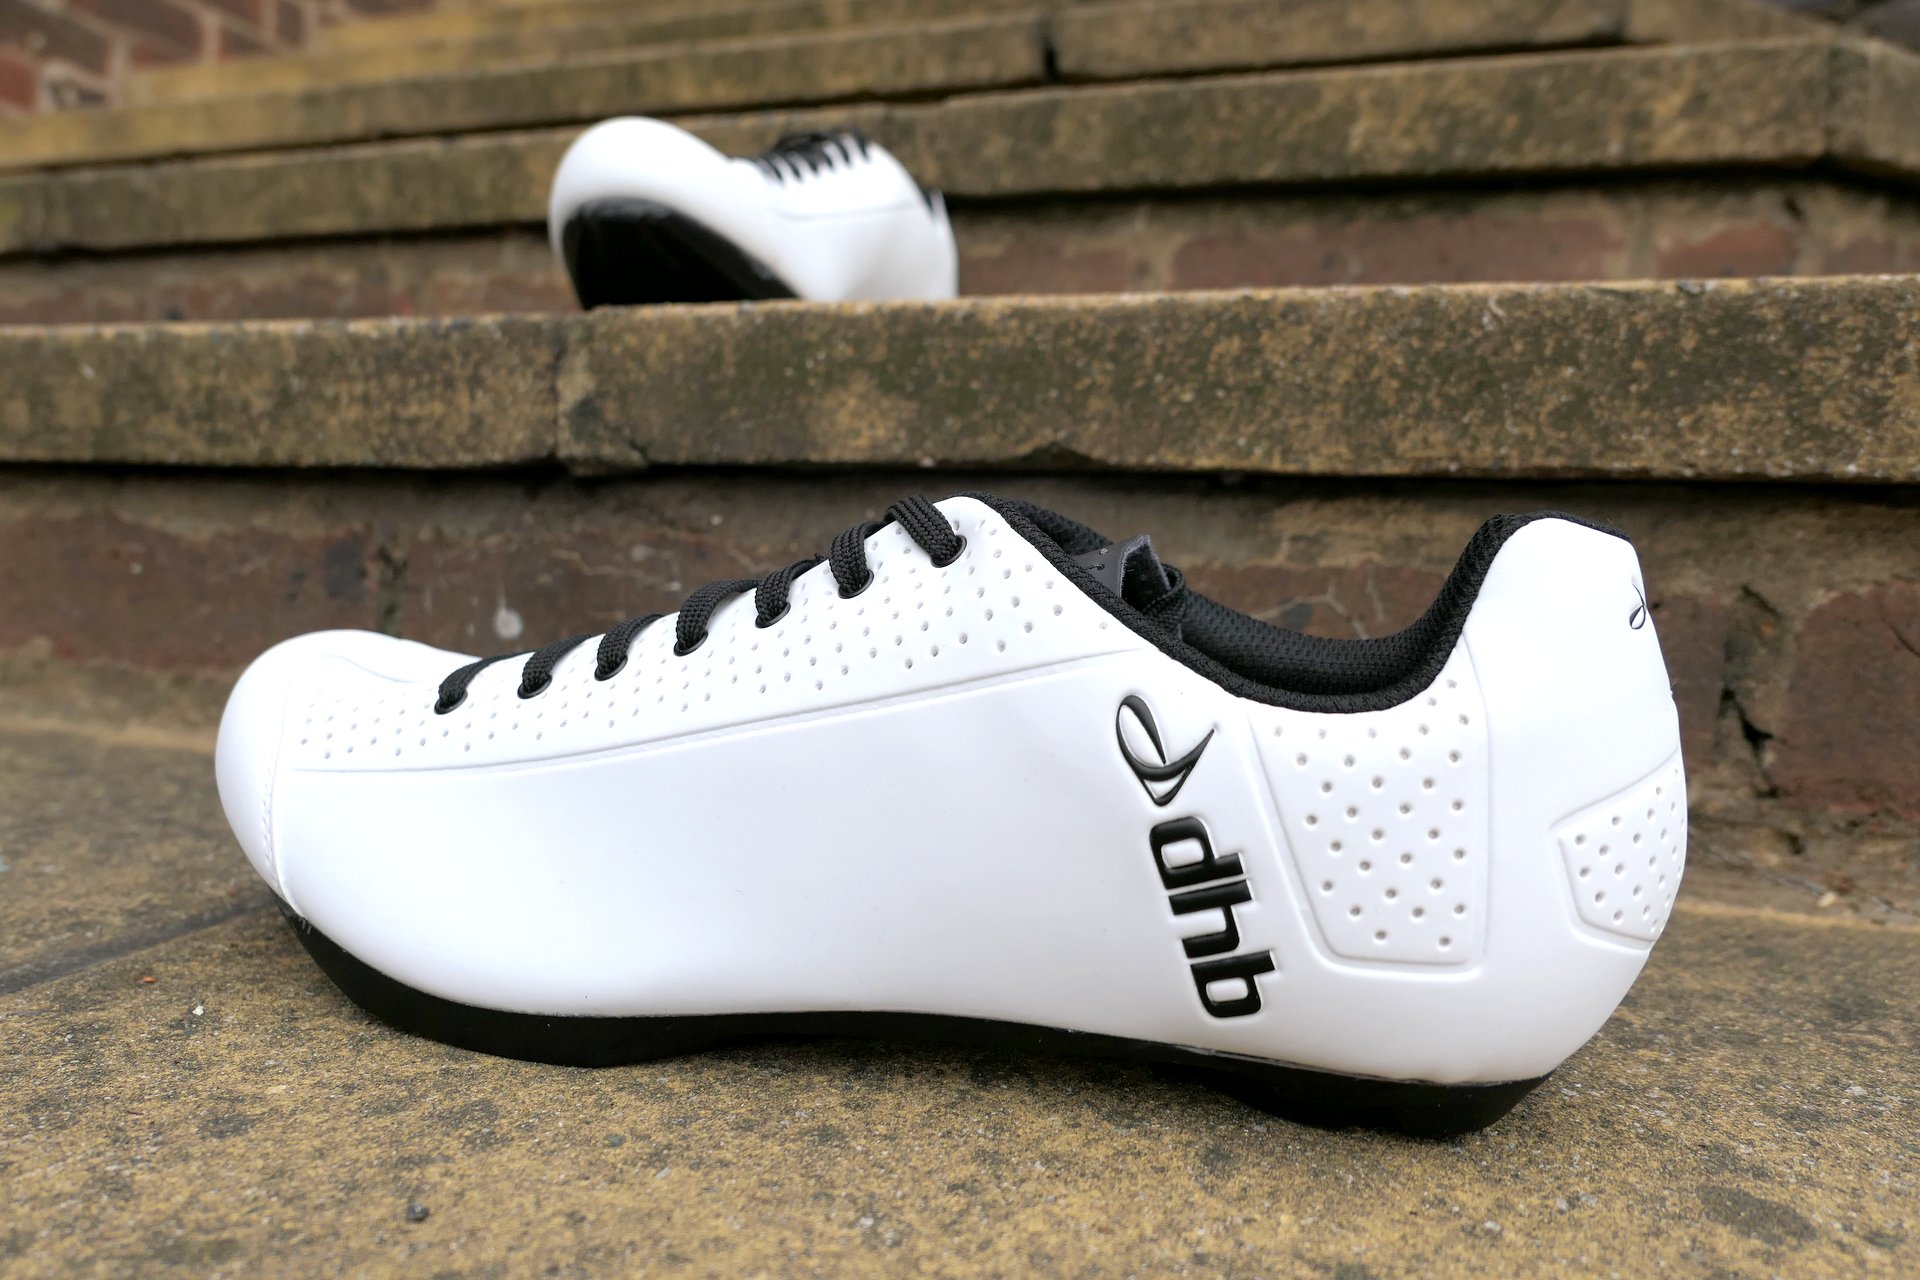 dhb Dorica Road Shoe – review - Road Cycling UK